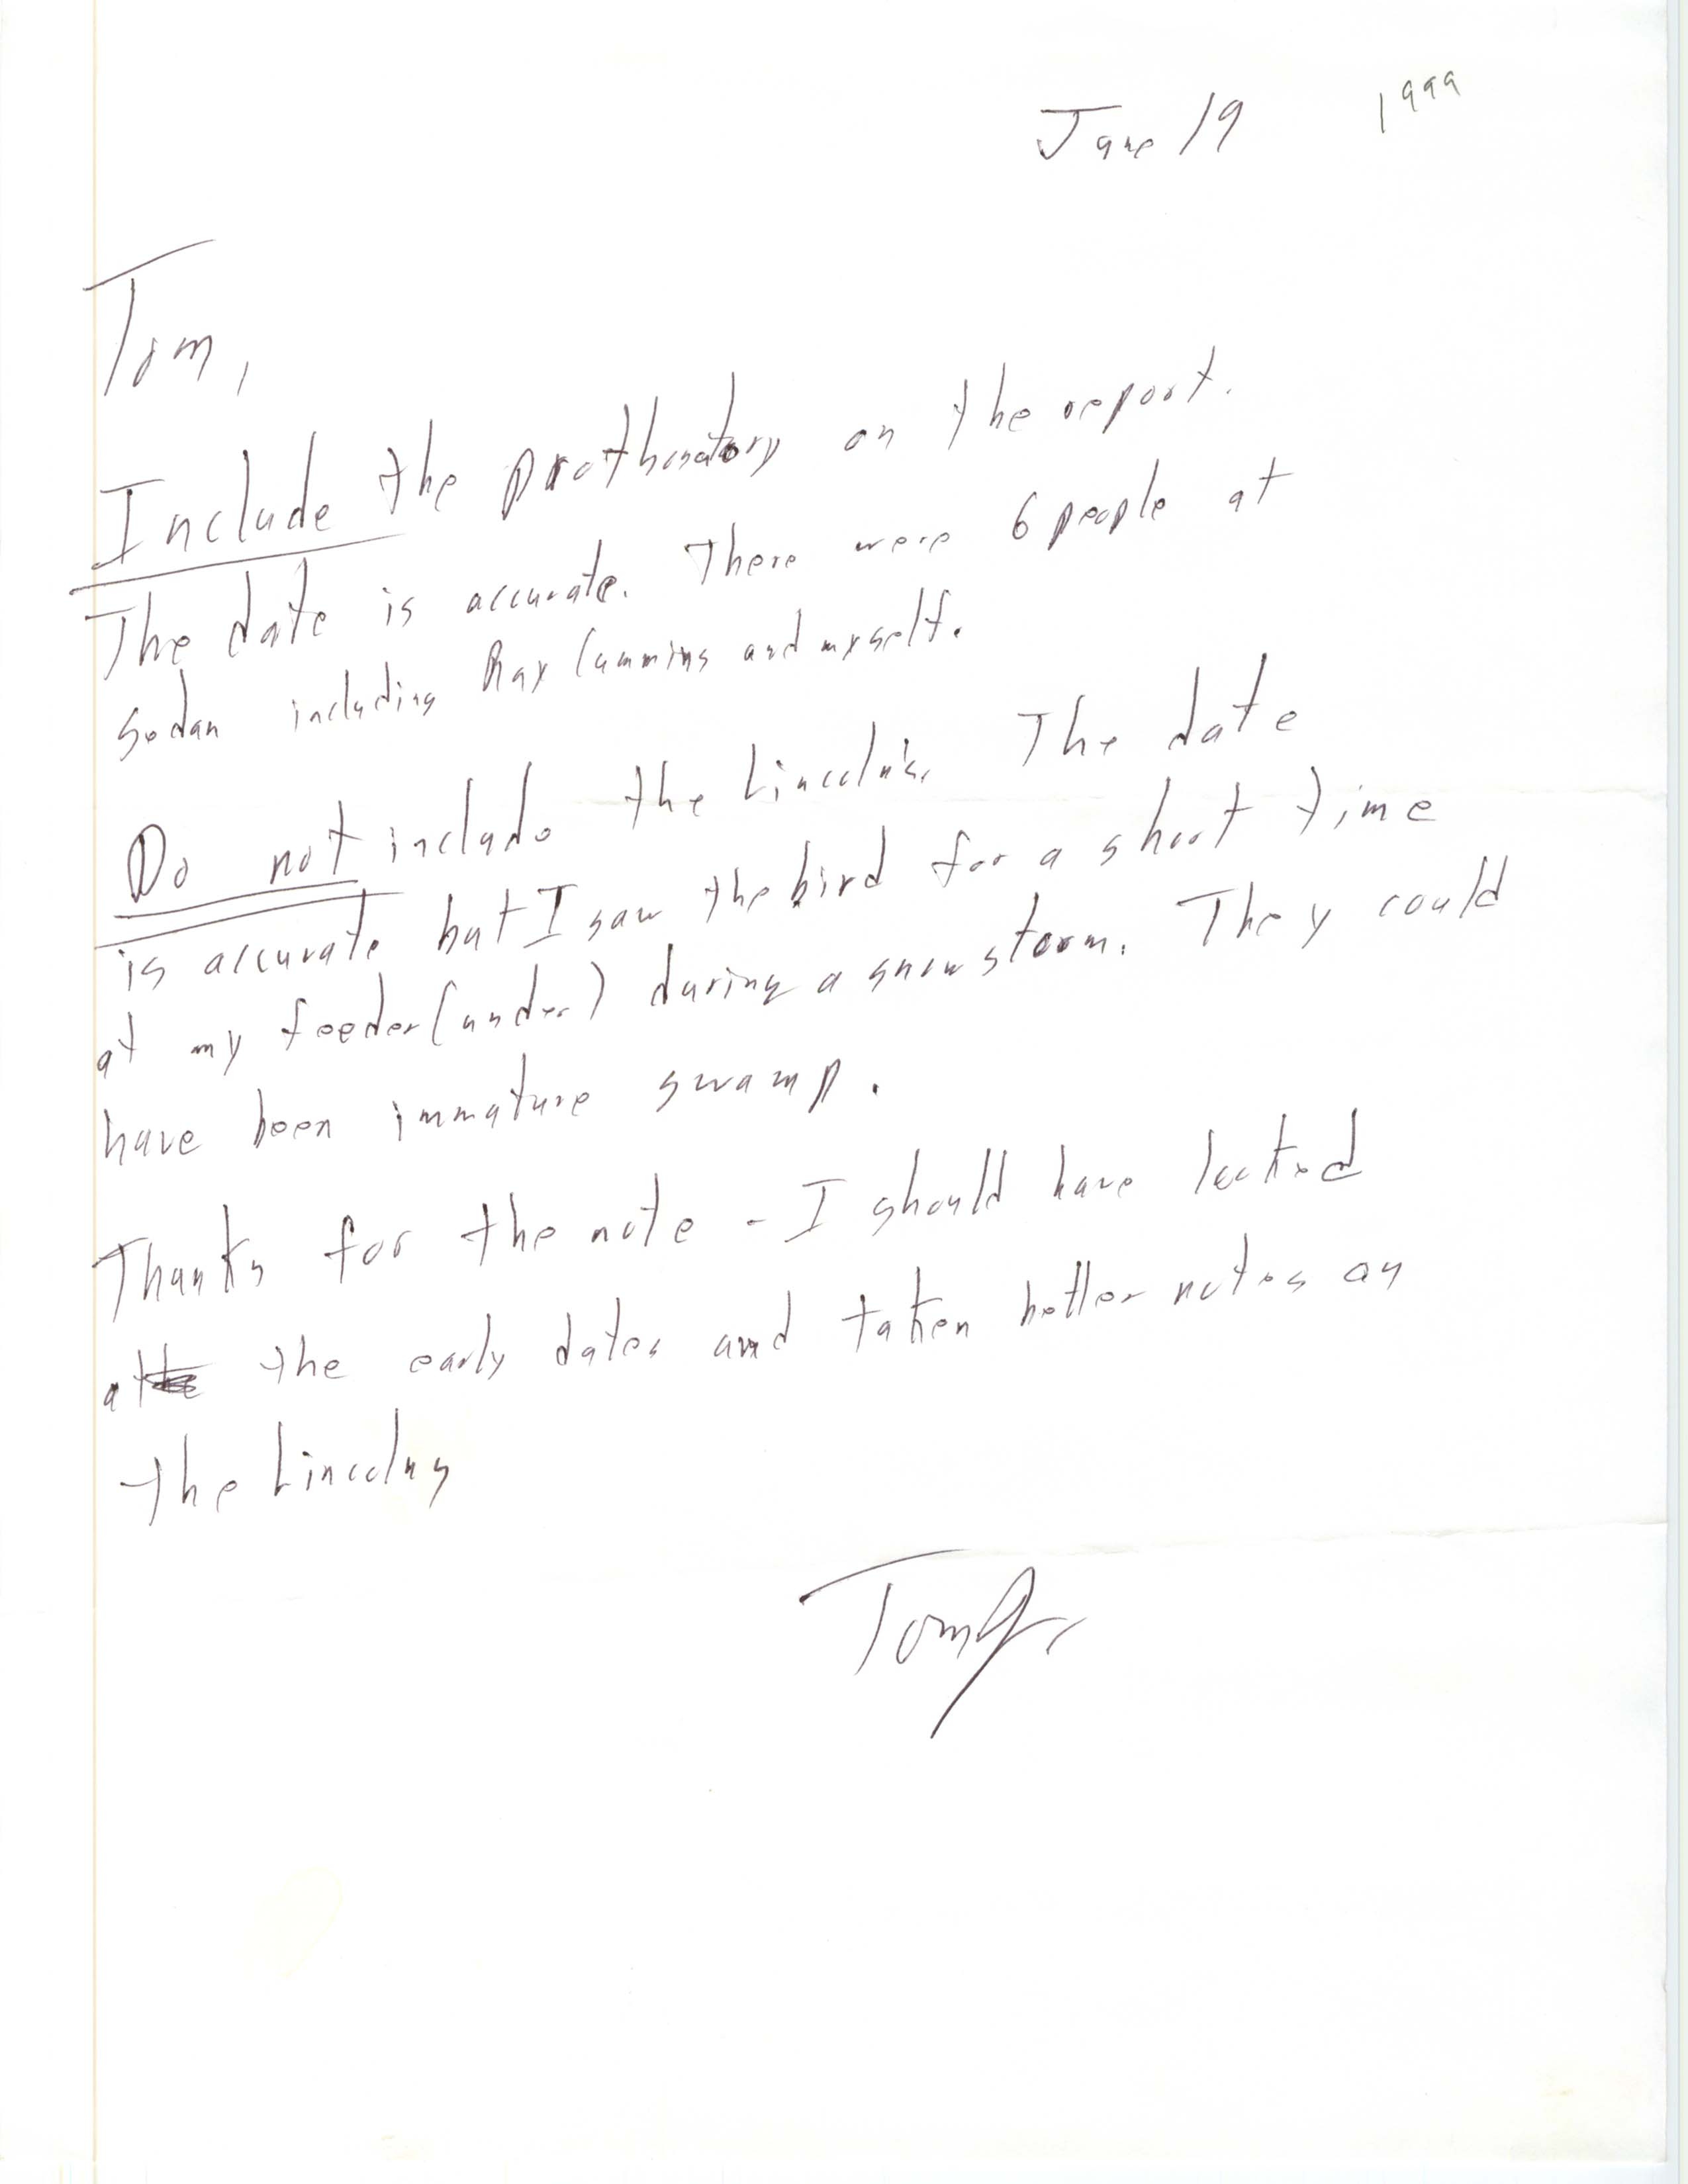 Thomas Johnson letter to Thomas Kent regarding bird sightings, June 19, 1999